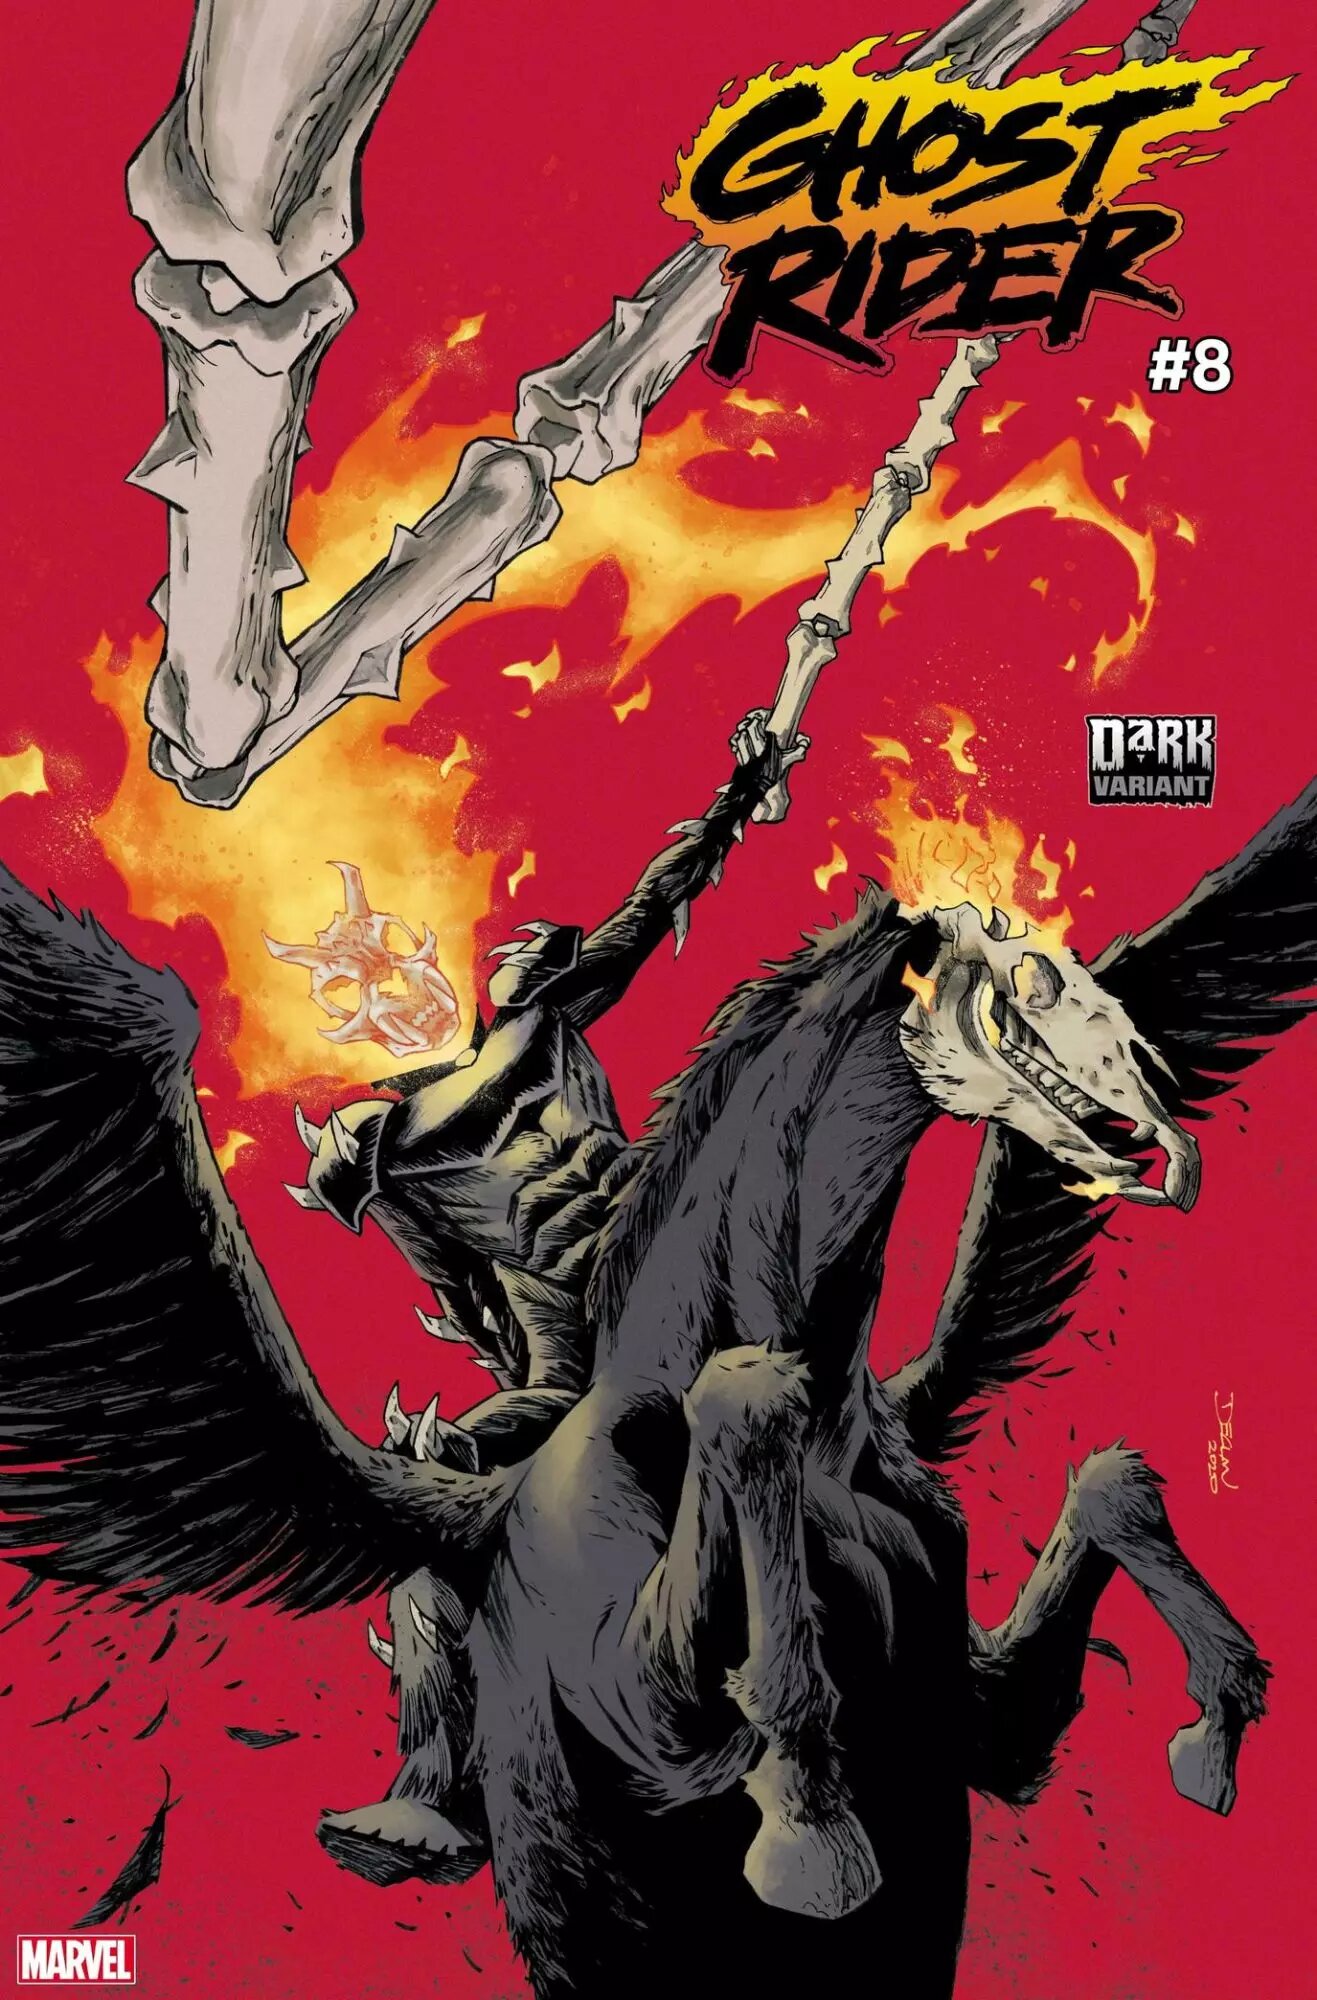 GHOST RIDER #1 Wraparound Variant Cover Vol 9 Marvel Comics 2019 AUG190981